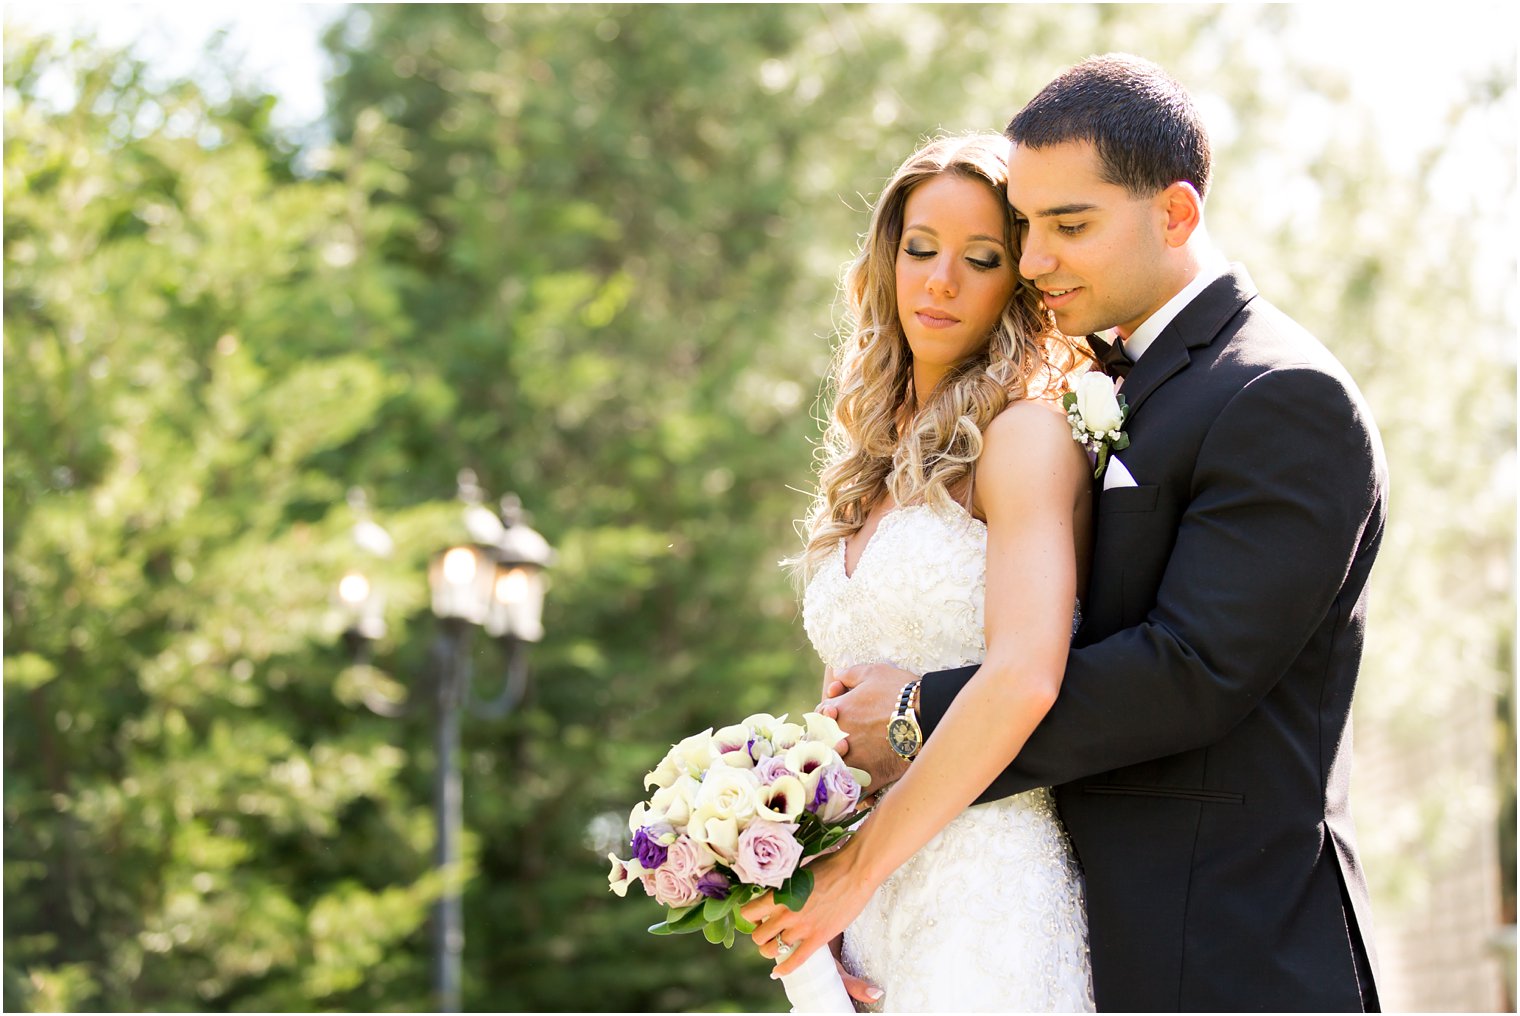 Romantic bride and groom | Photos by Idalia Photography